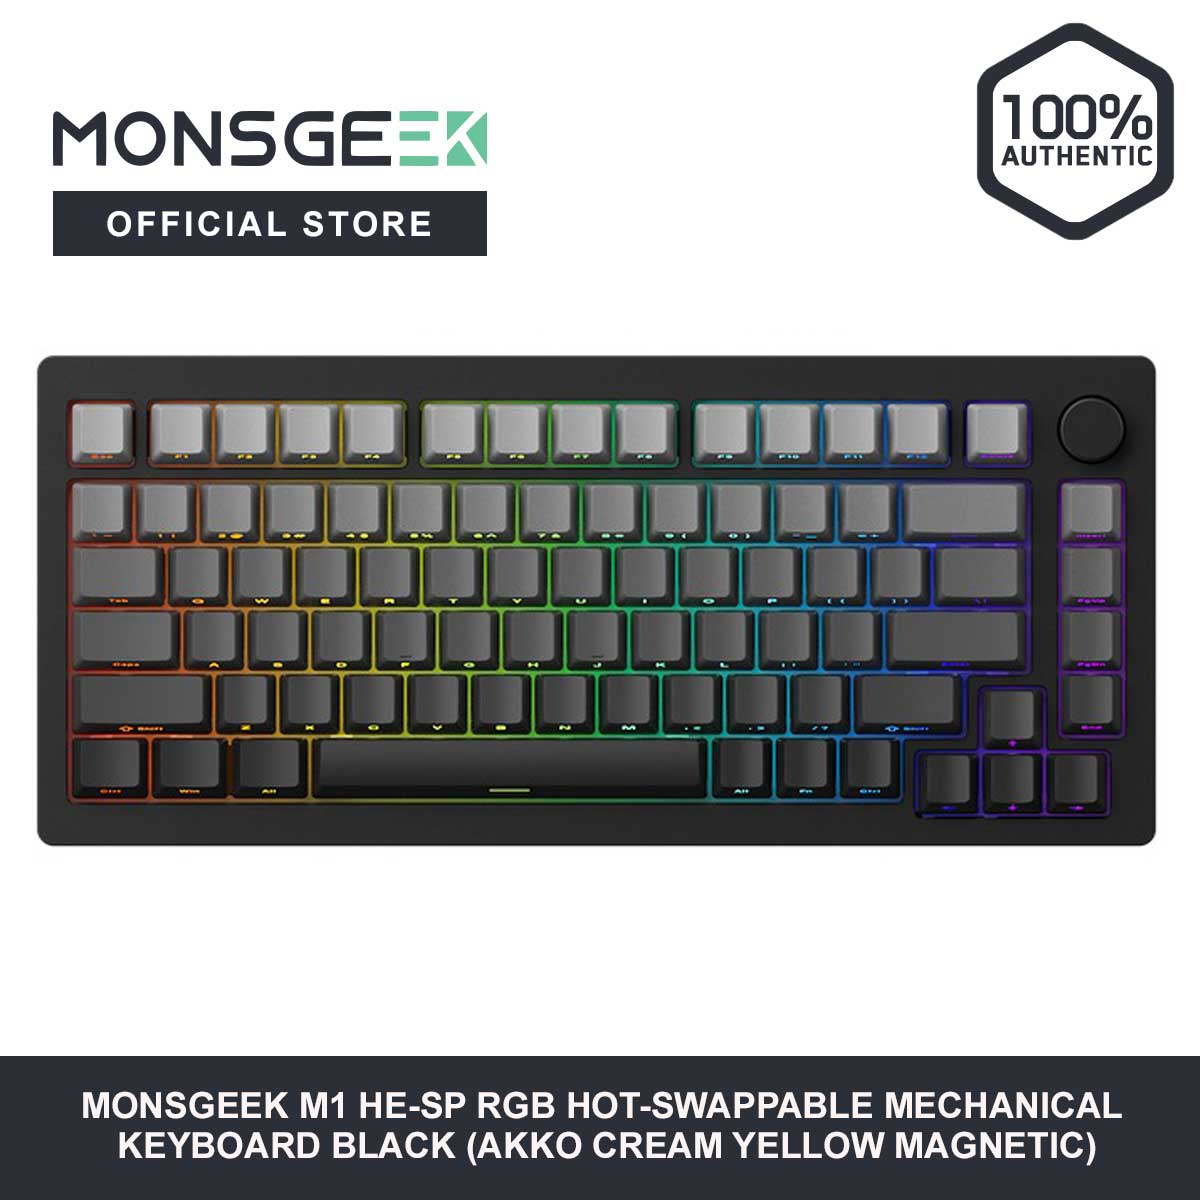 Monsgeek M1 HE-SP RGB Hot-Swappable Mechanical Keyboard Black